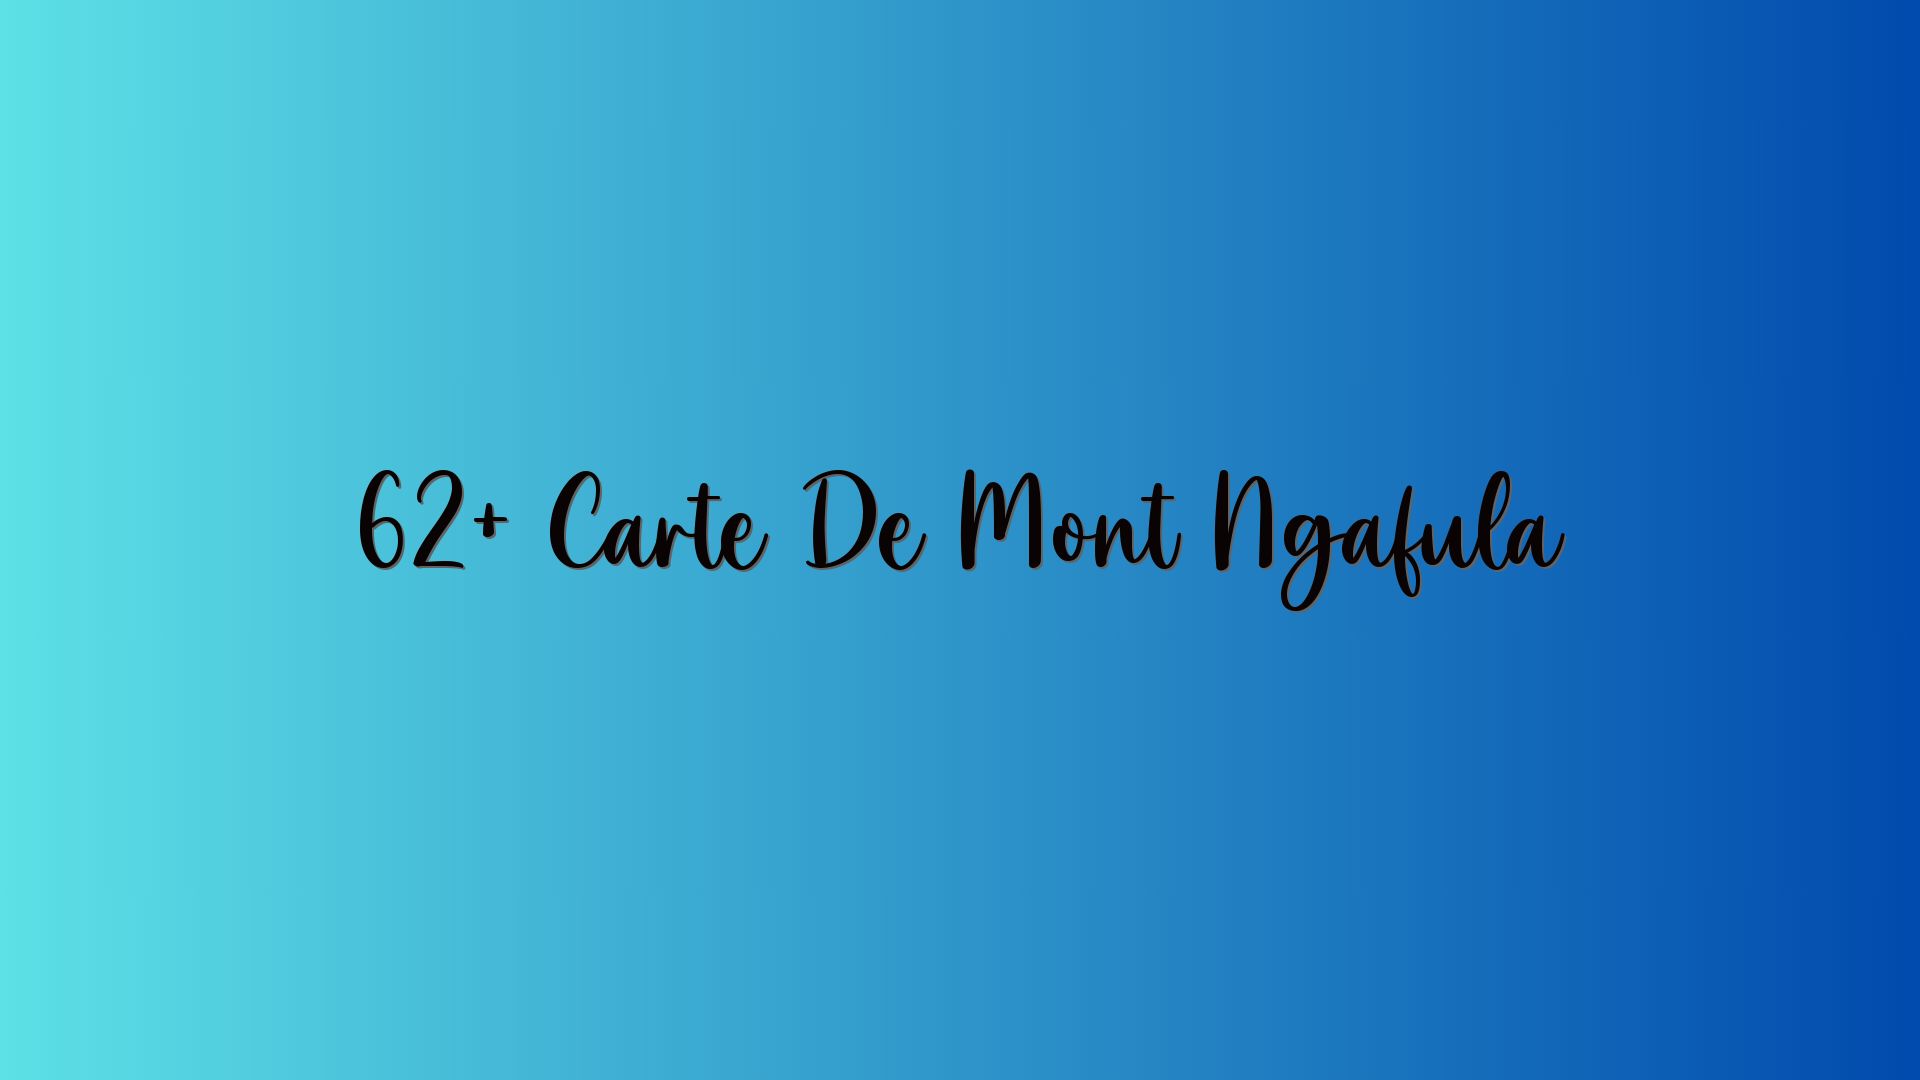 62+ Carte De Mont Ngafula